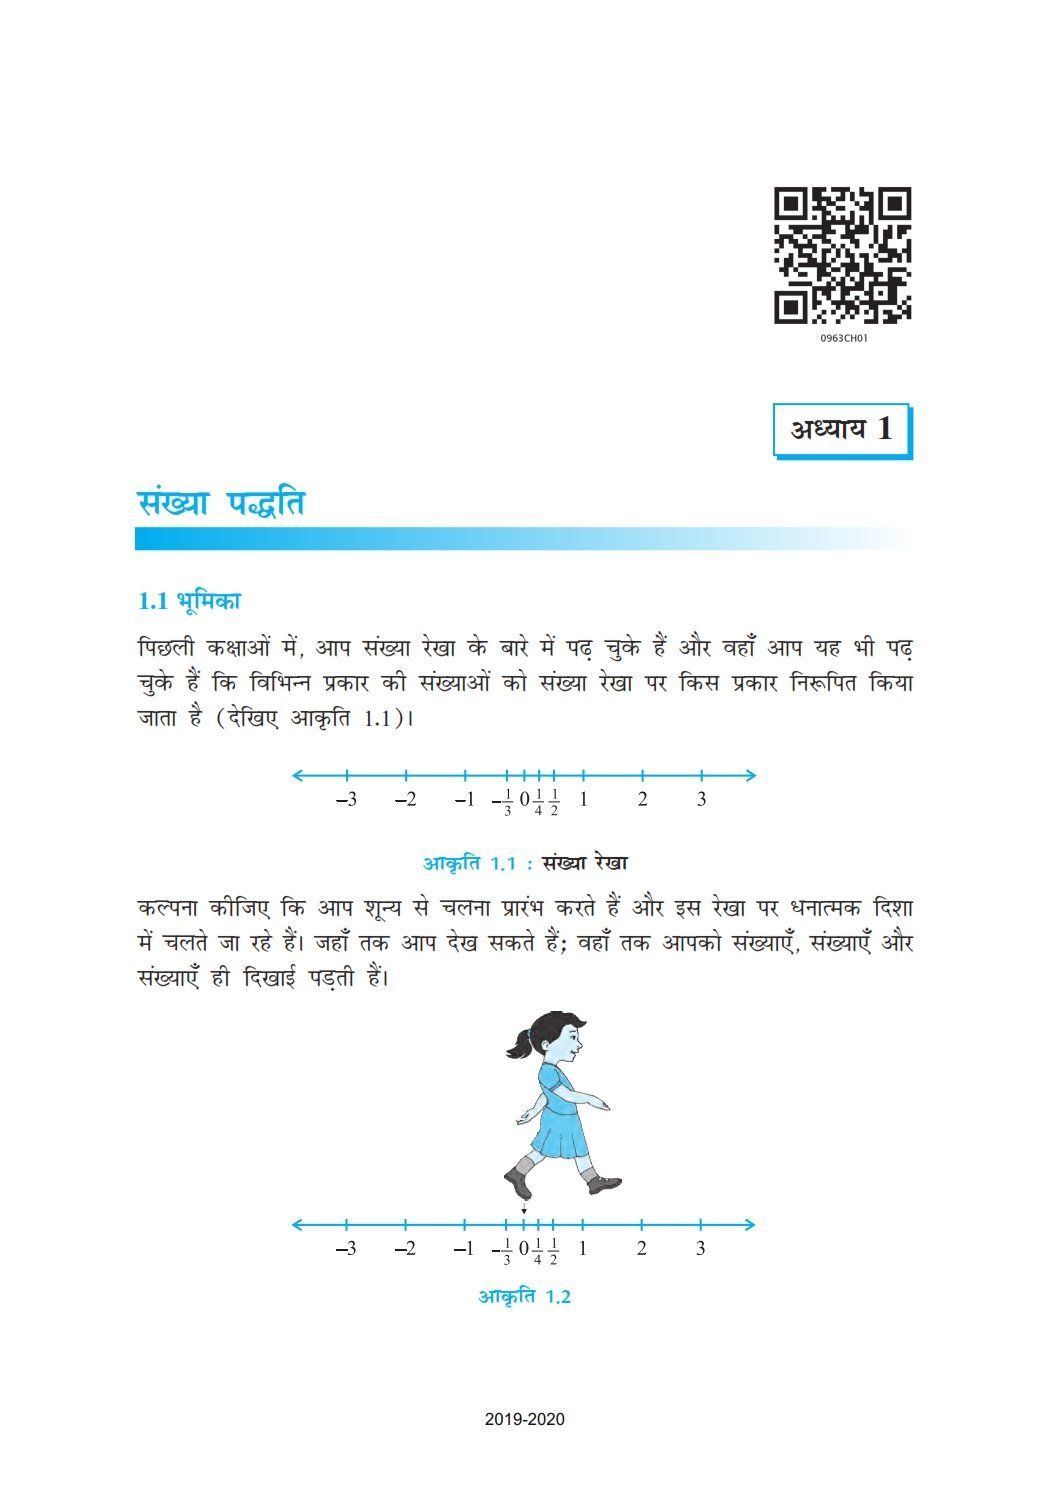 Bihar Board Class 9 Ganit TextBook - Page 1